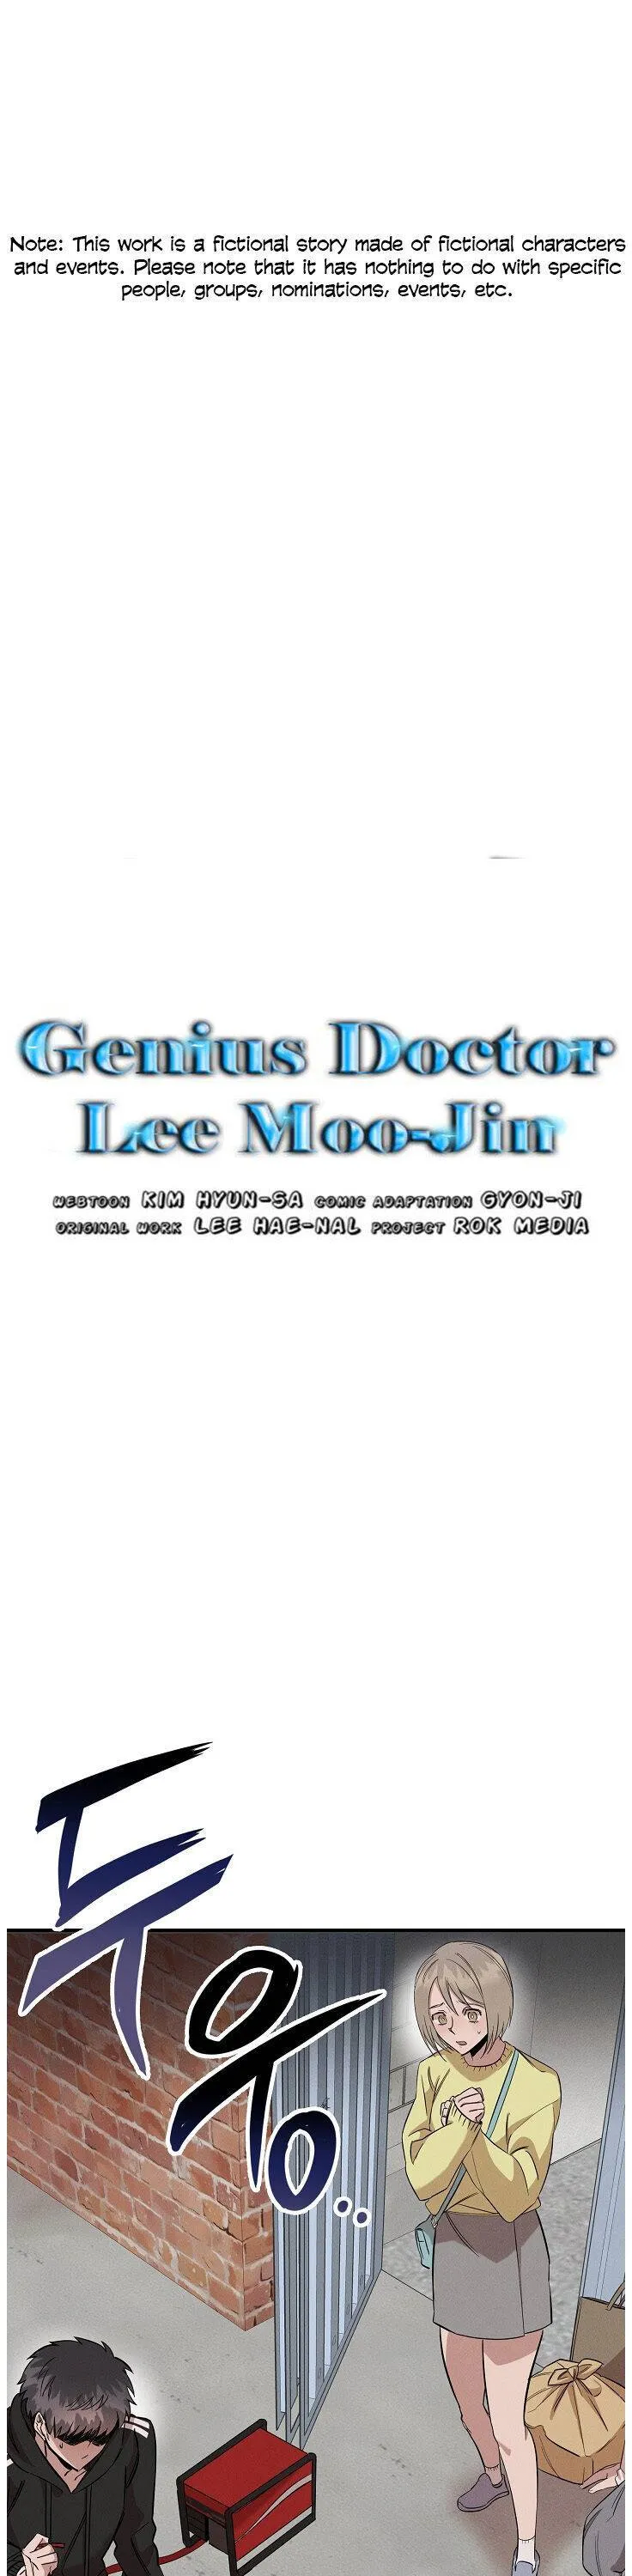 Genius Doctor Lee Moo-jin Chapter 11 page 2